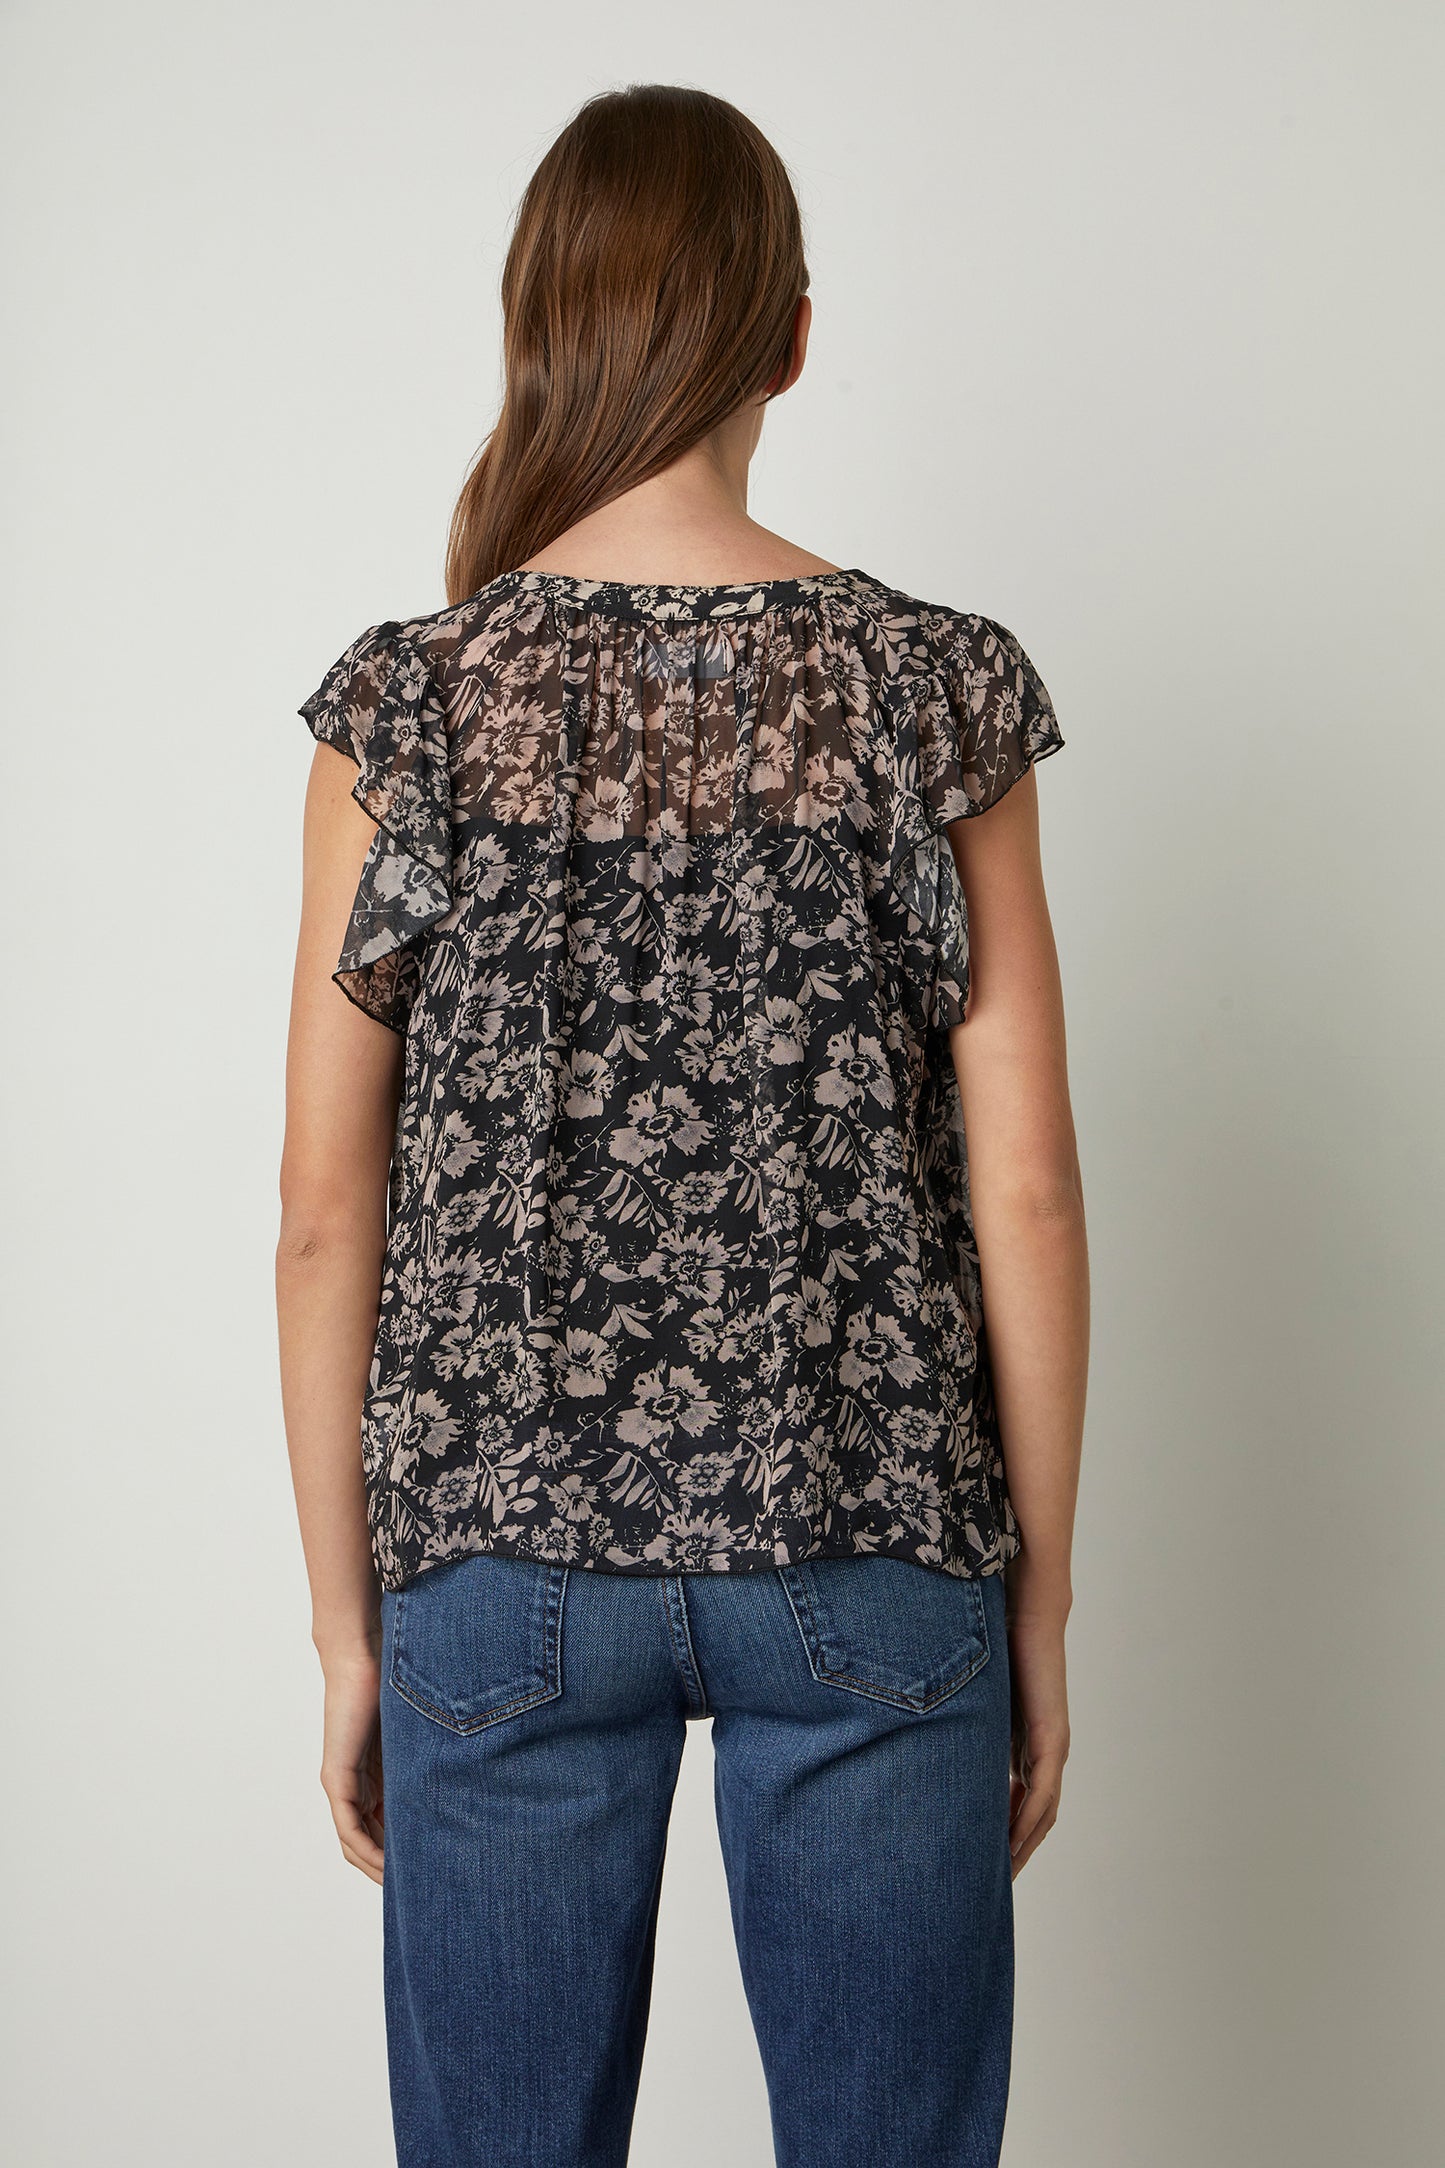 demi blouse black floral back-24257287160001